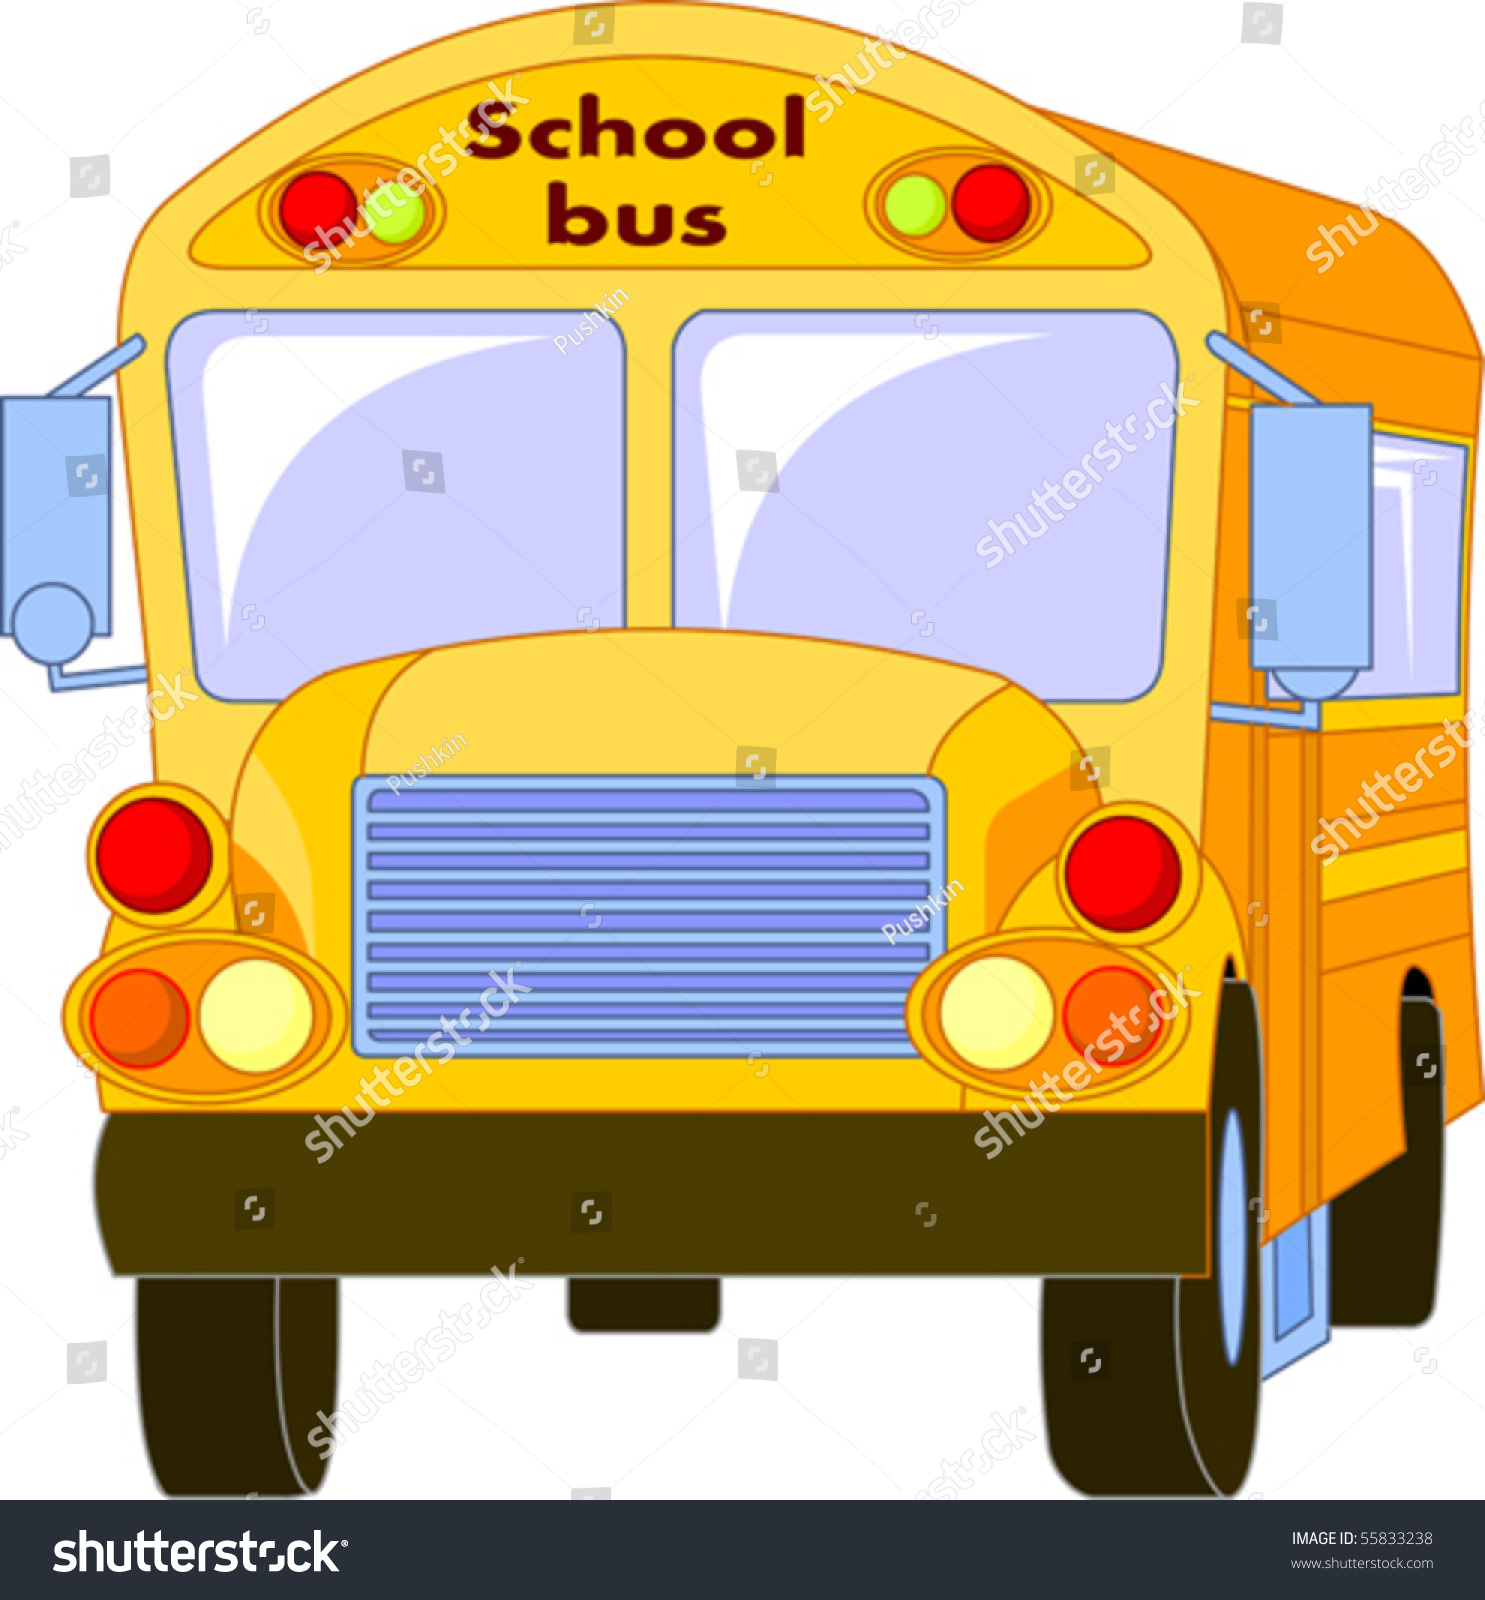 yellow school bus clipart - photo #23